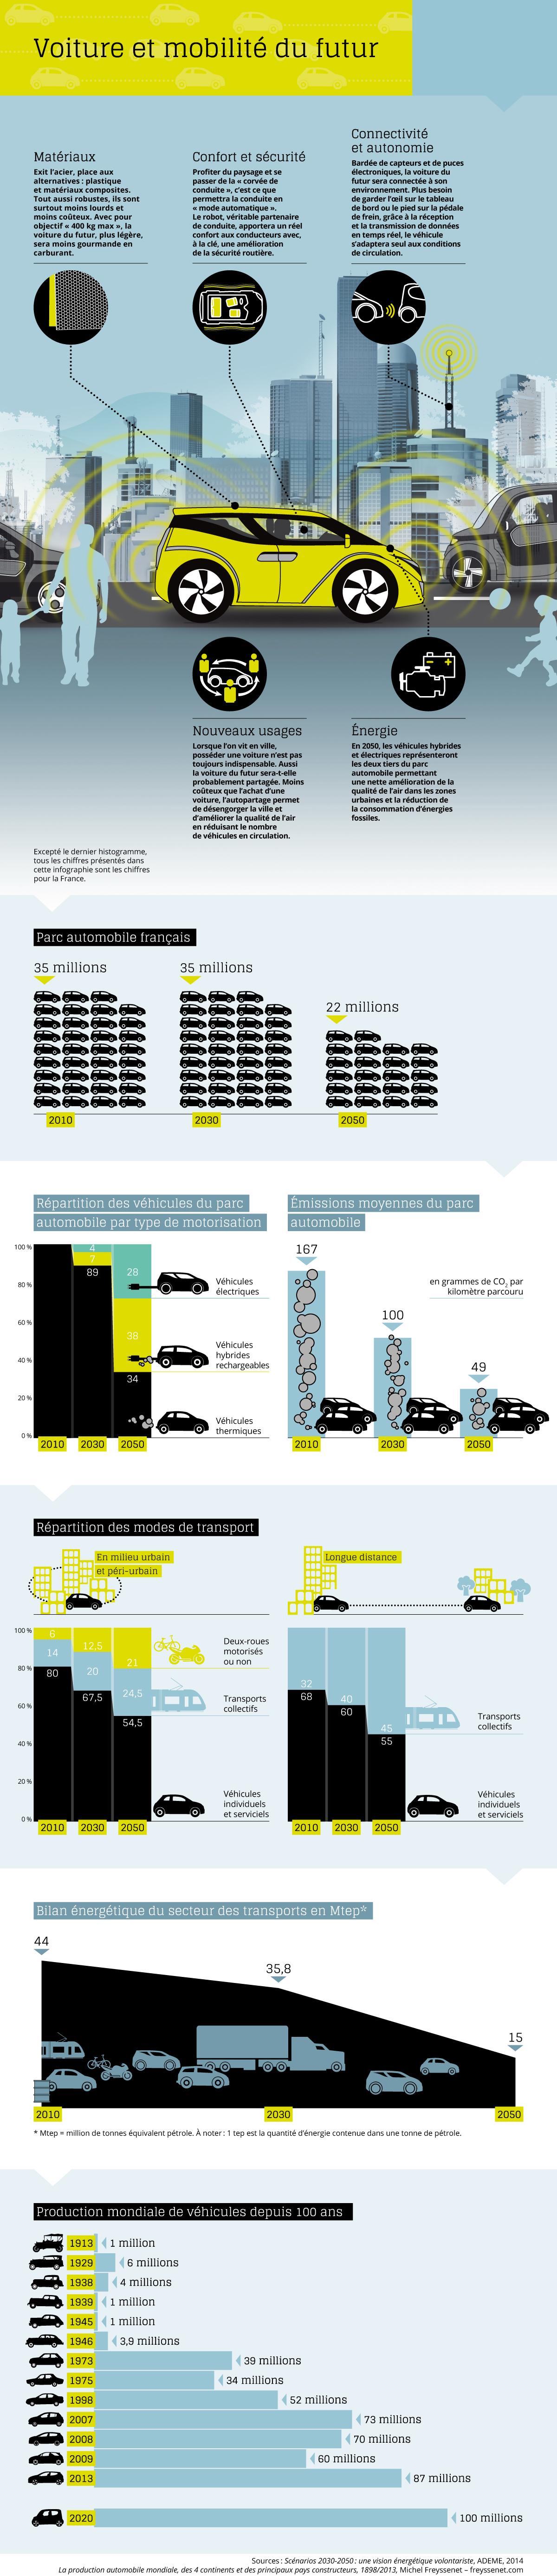 infographie voiture du futur